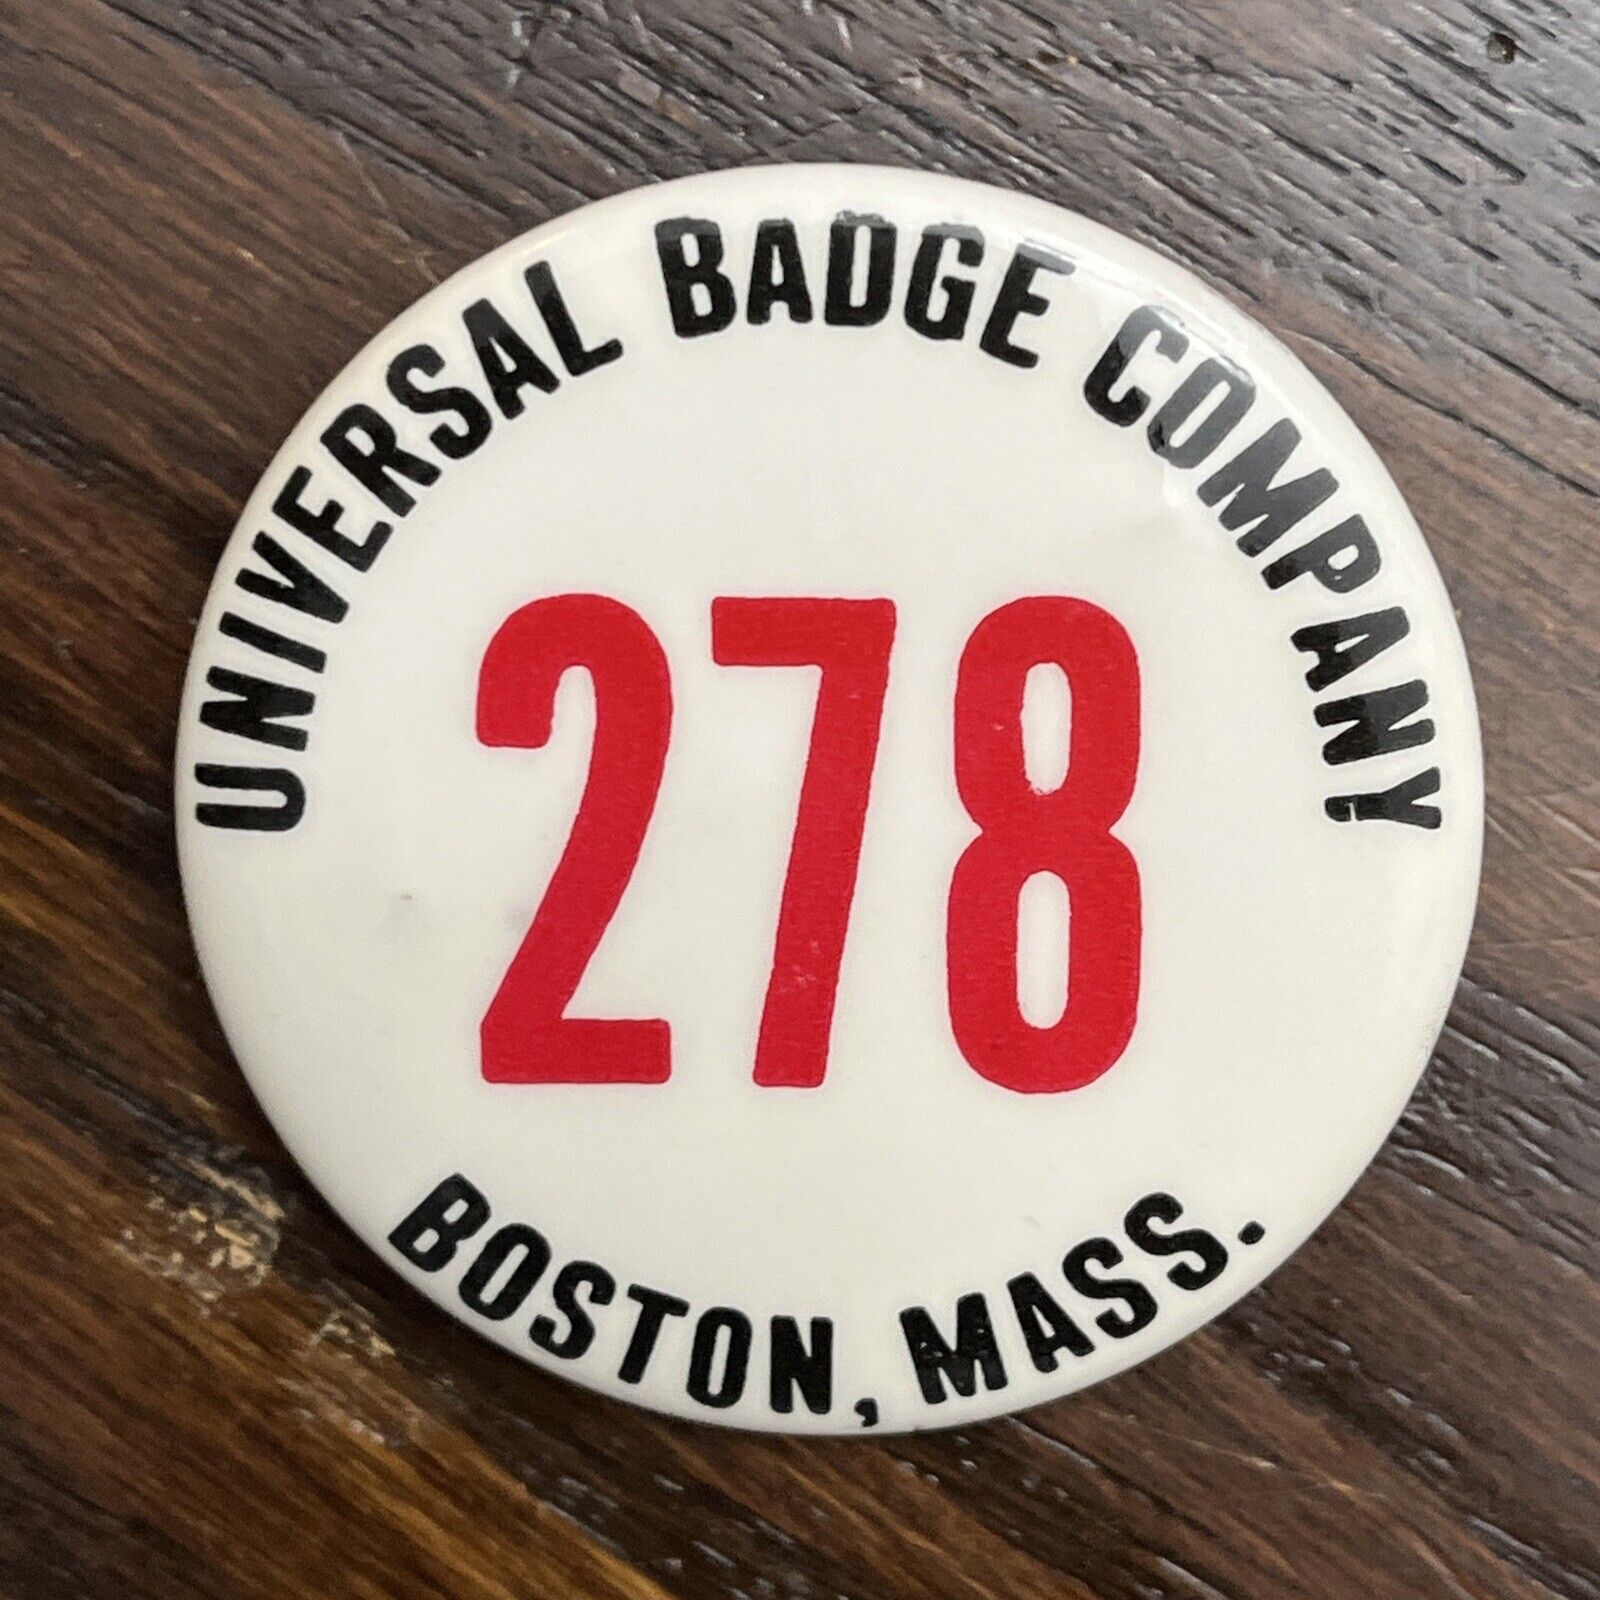 Universal Badge Company 278 Boston, Mass Antique Employee badge pinback